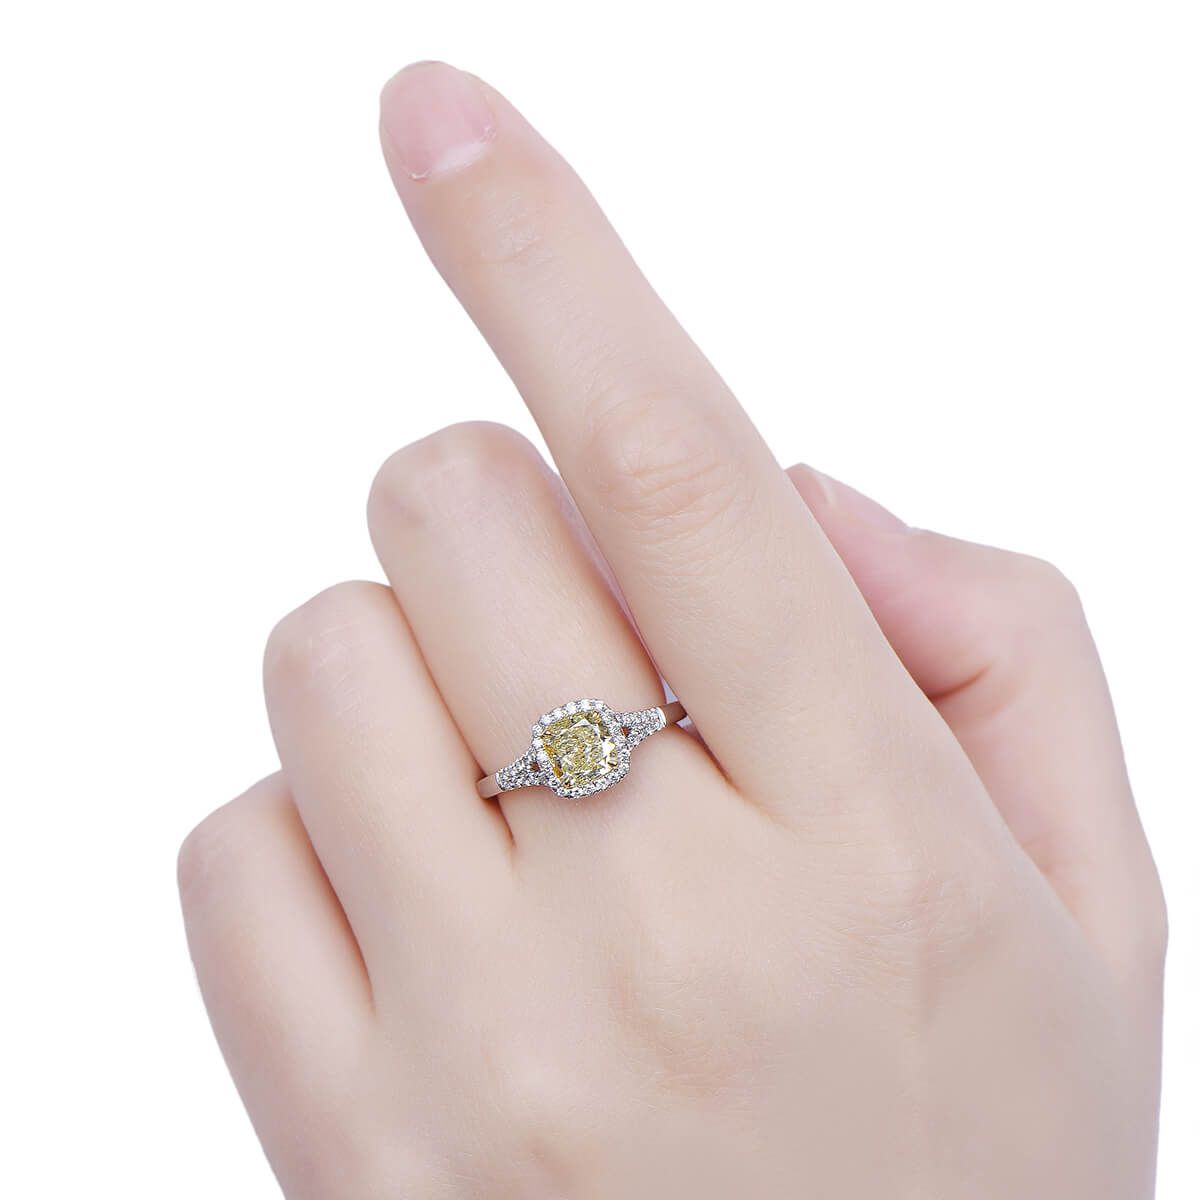 Light Yellow (W-X) Diamond Ring, 1.17 Ct. TW, Cushion shape